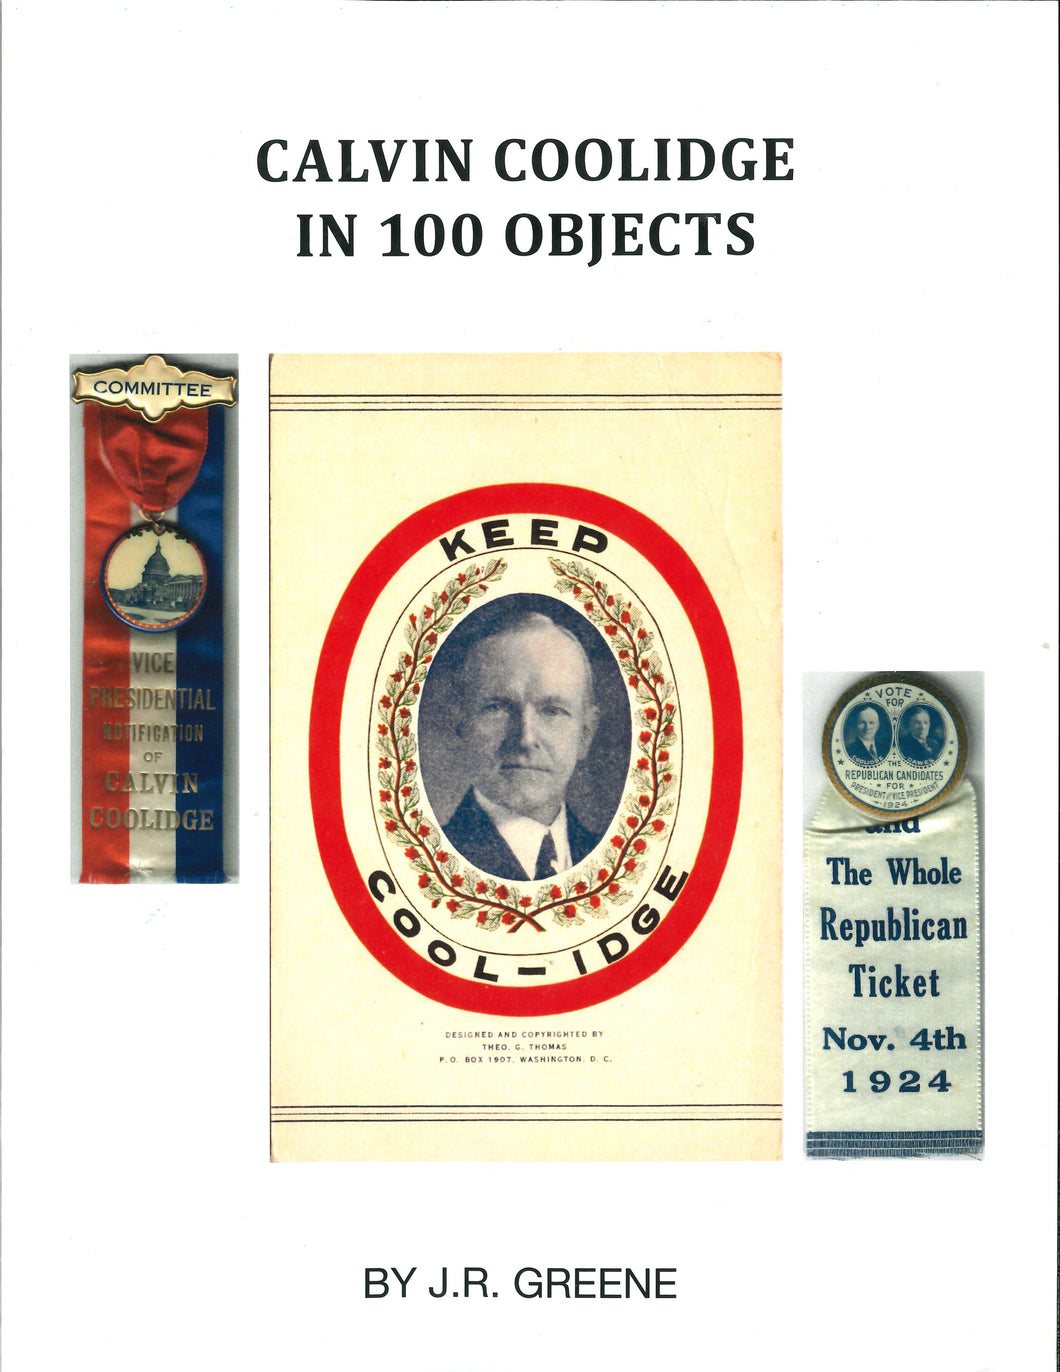 Calvin Coolidge in 100 Objects by J.R. Greene